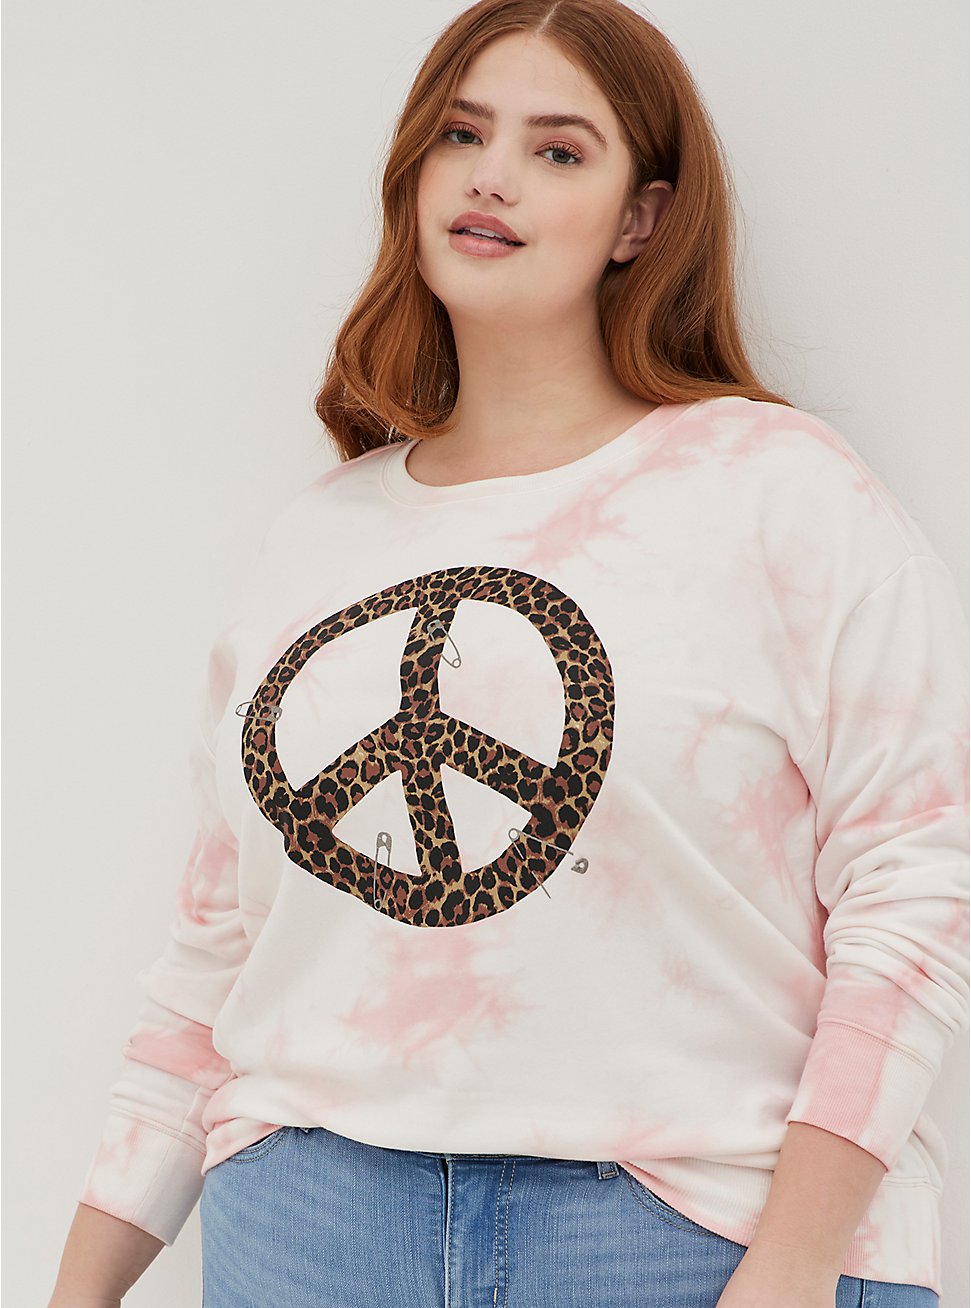 Drop Shoulder Sweatshirt - Super Soft Fleece Peace Tie Dye Pink Leopard, TIE DYE-PINK, hi-res